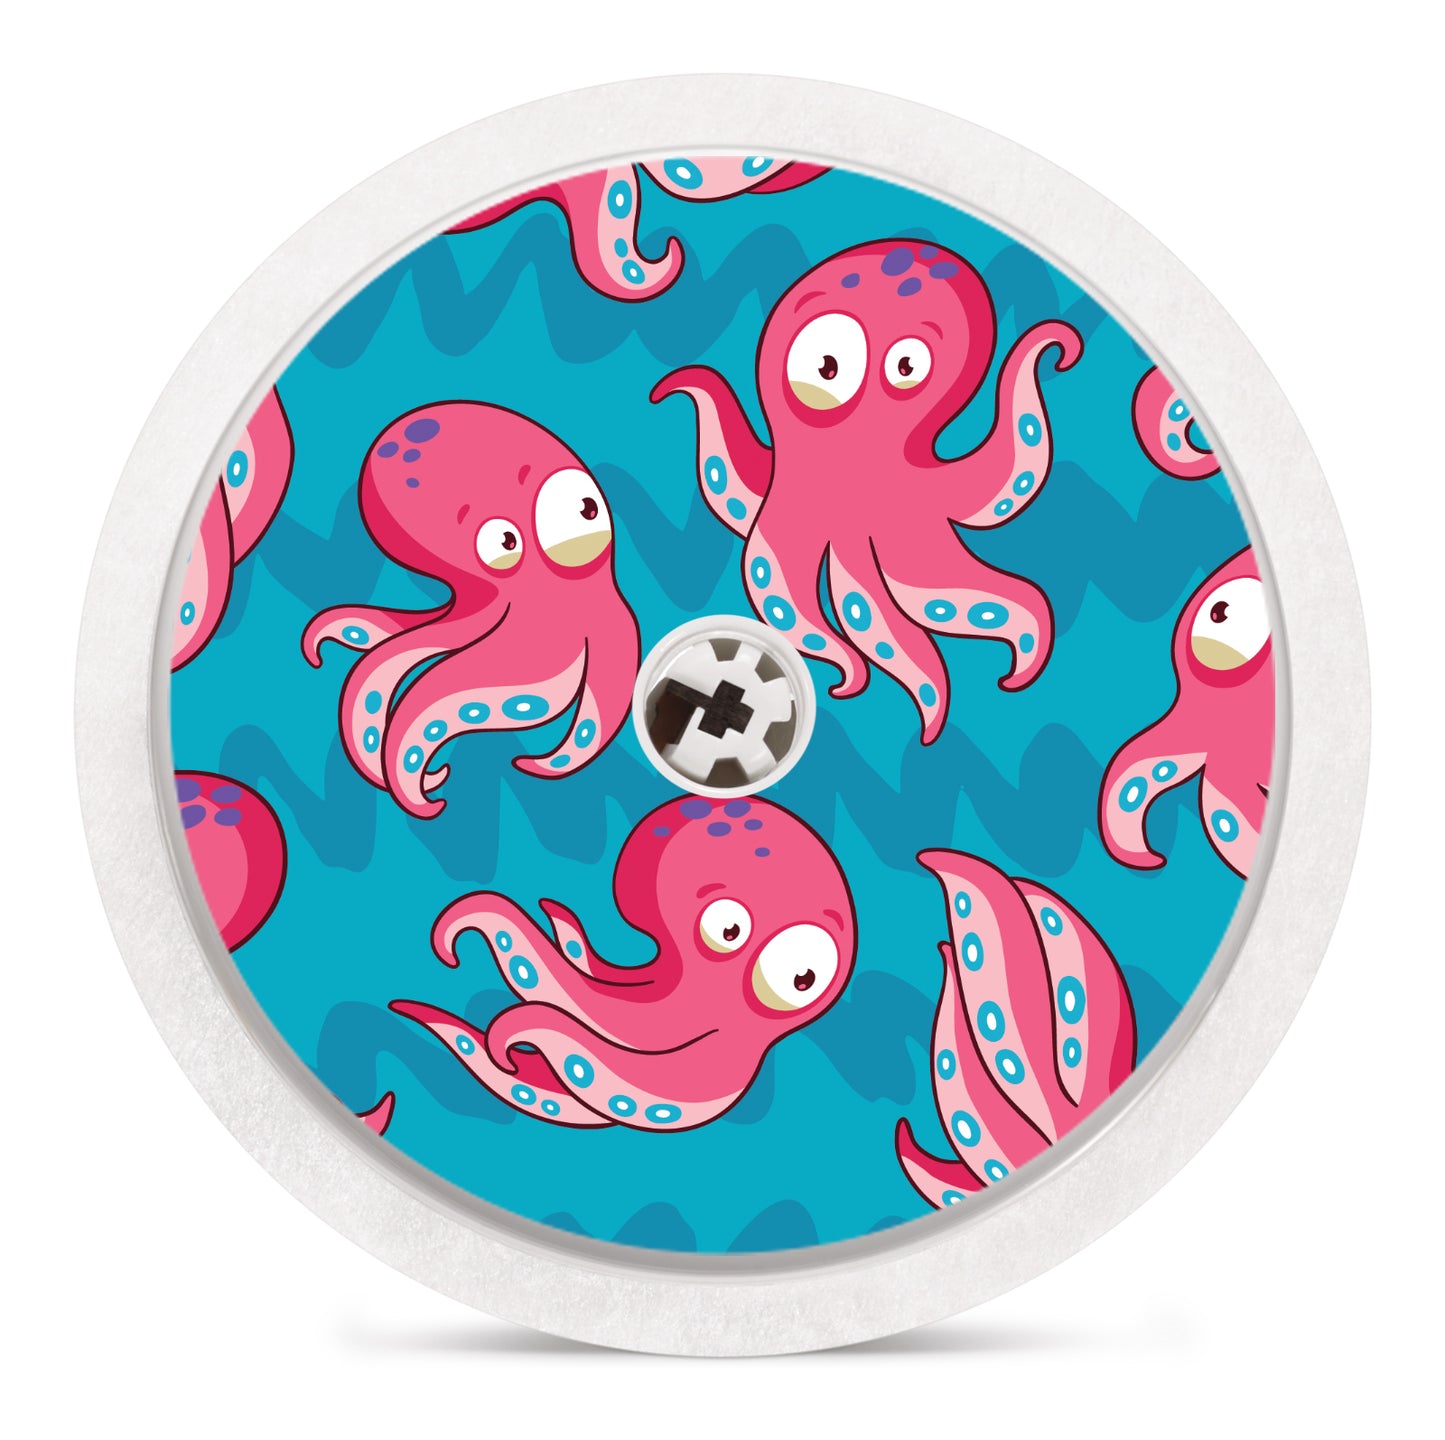 Octopus - FreeStyle Libre Sensor Stickers